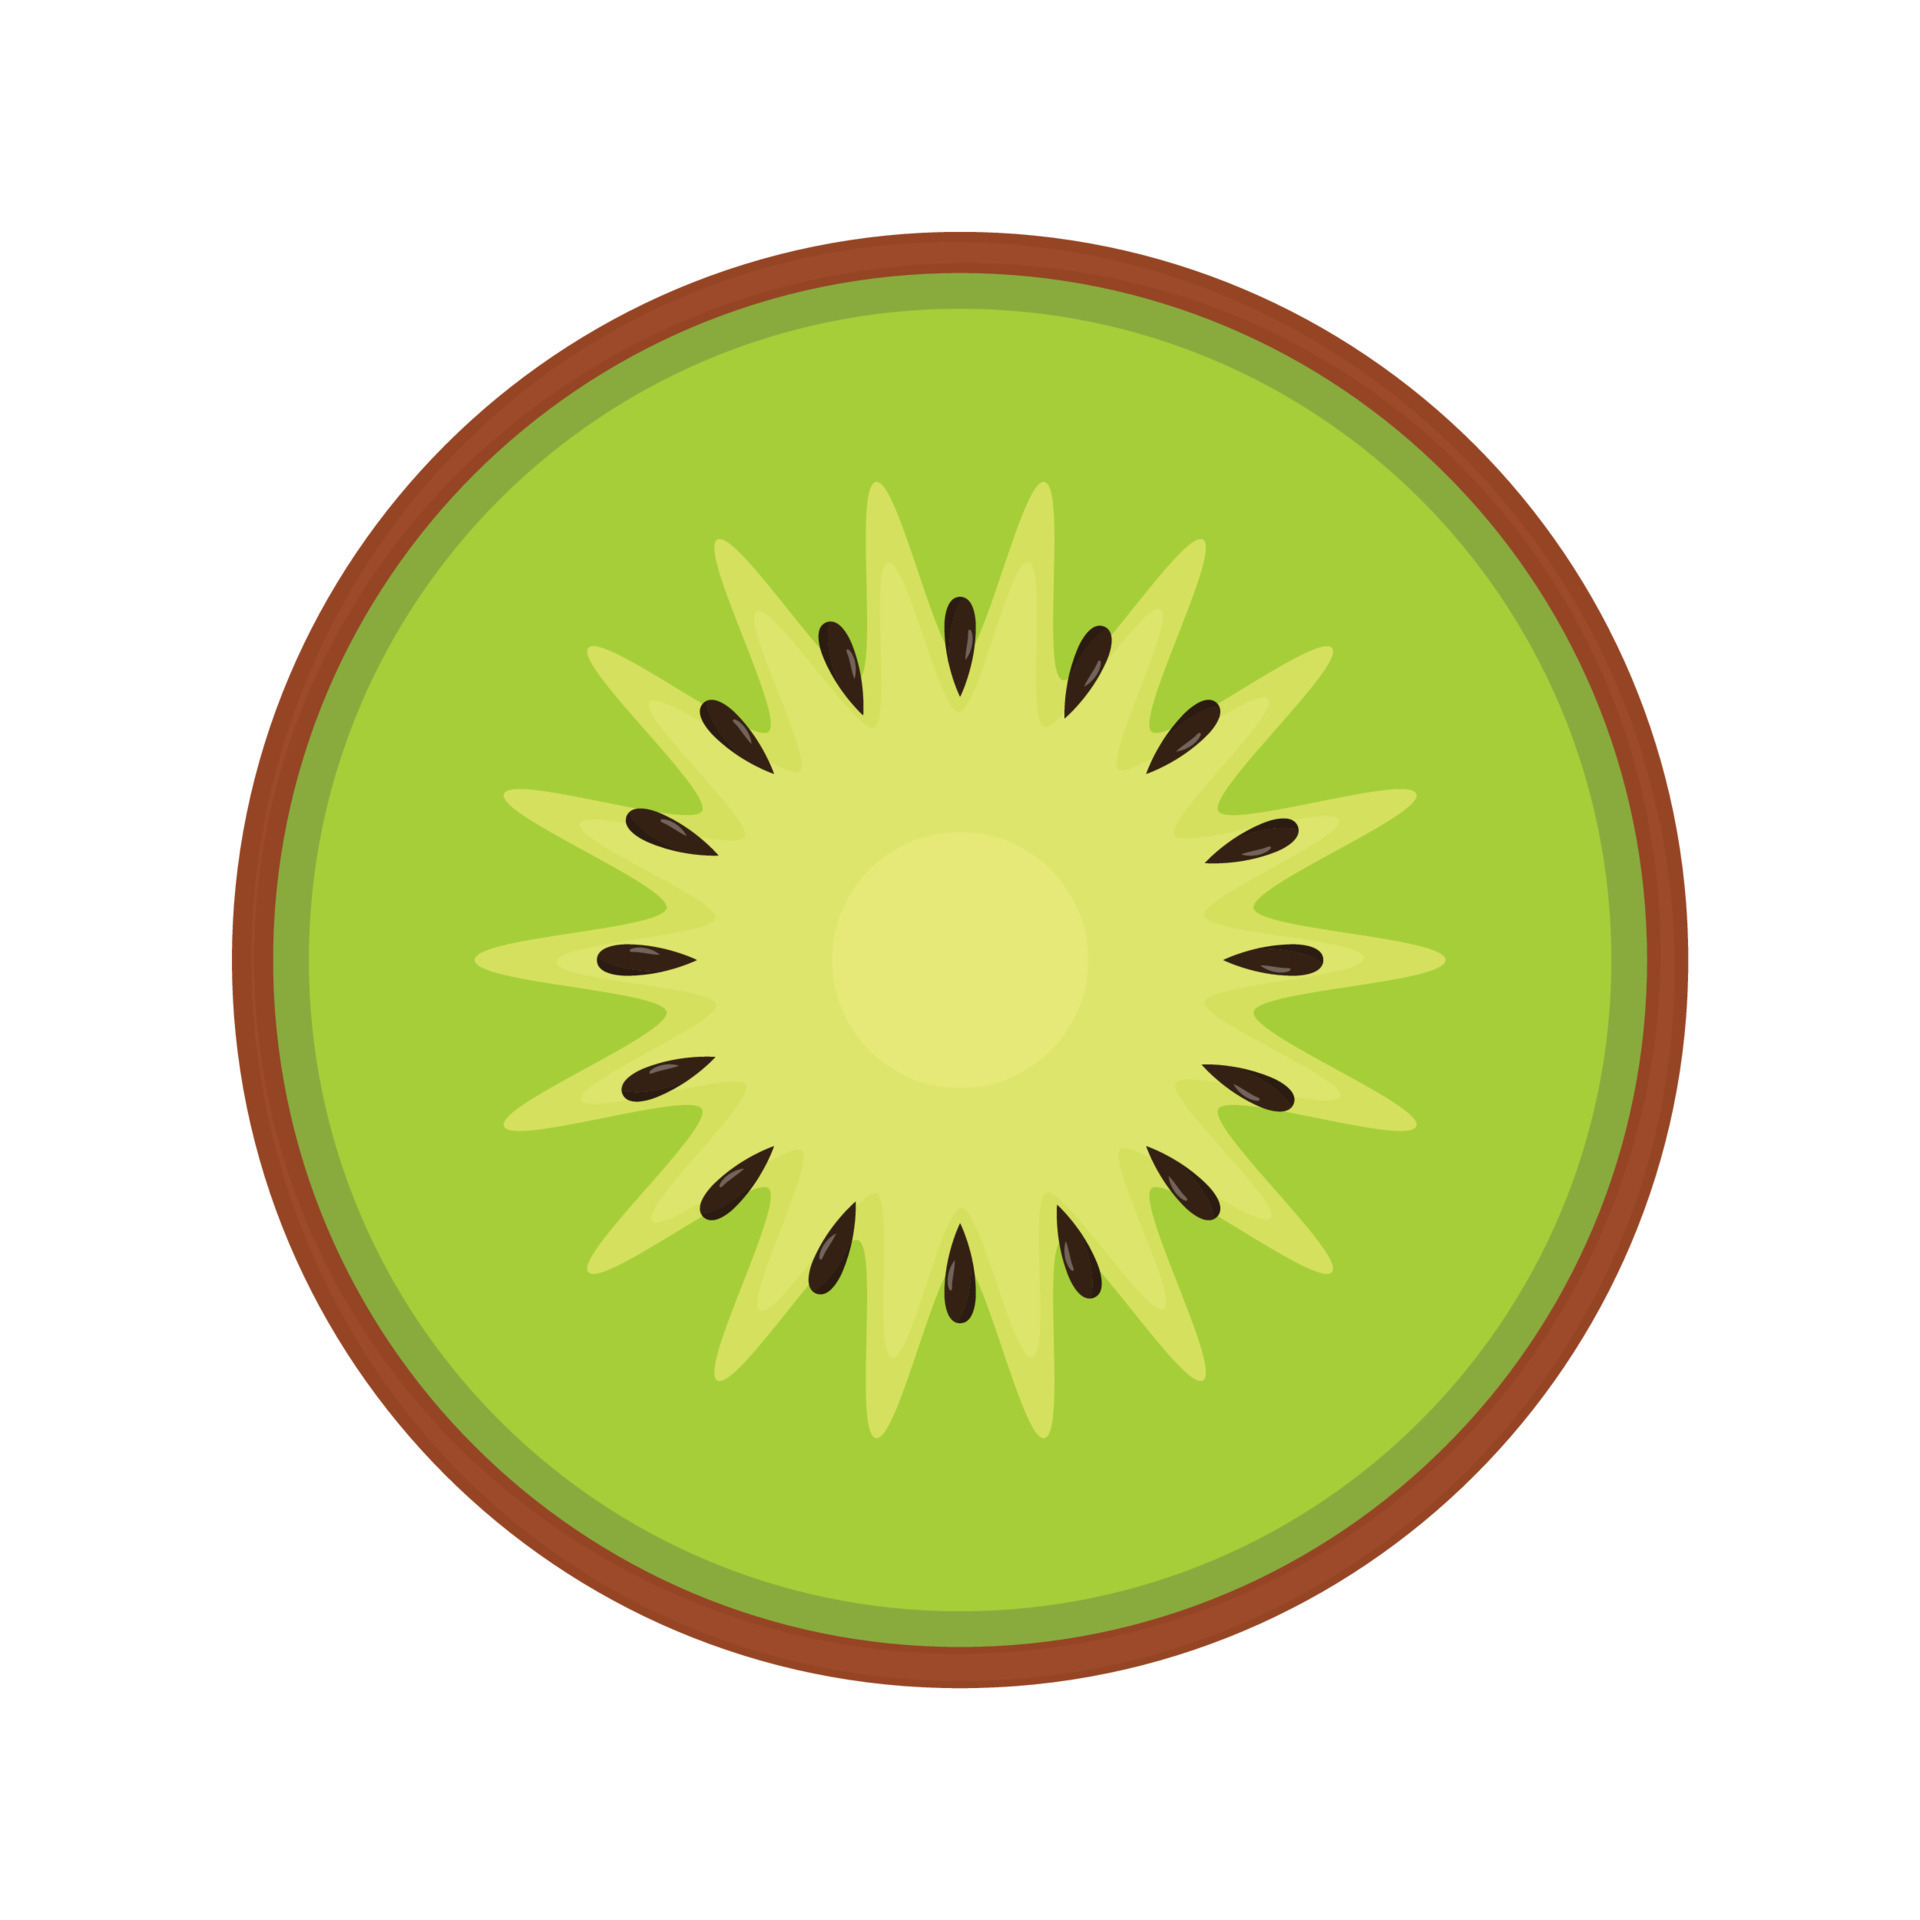 https://static.vecteezy.com/system/resources/previews/014/275/554/original/kiwi-kiwi-symbol-kiwi-on-white-background-logo-design-free-vector.jpg